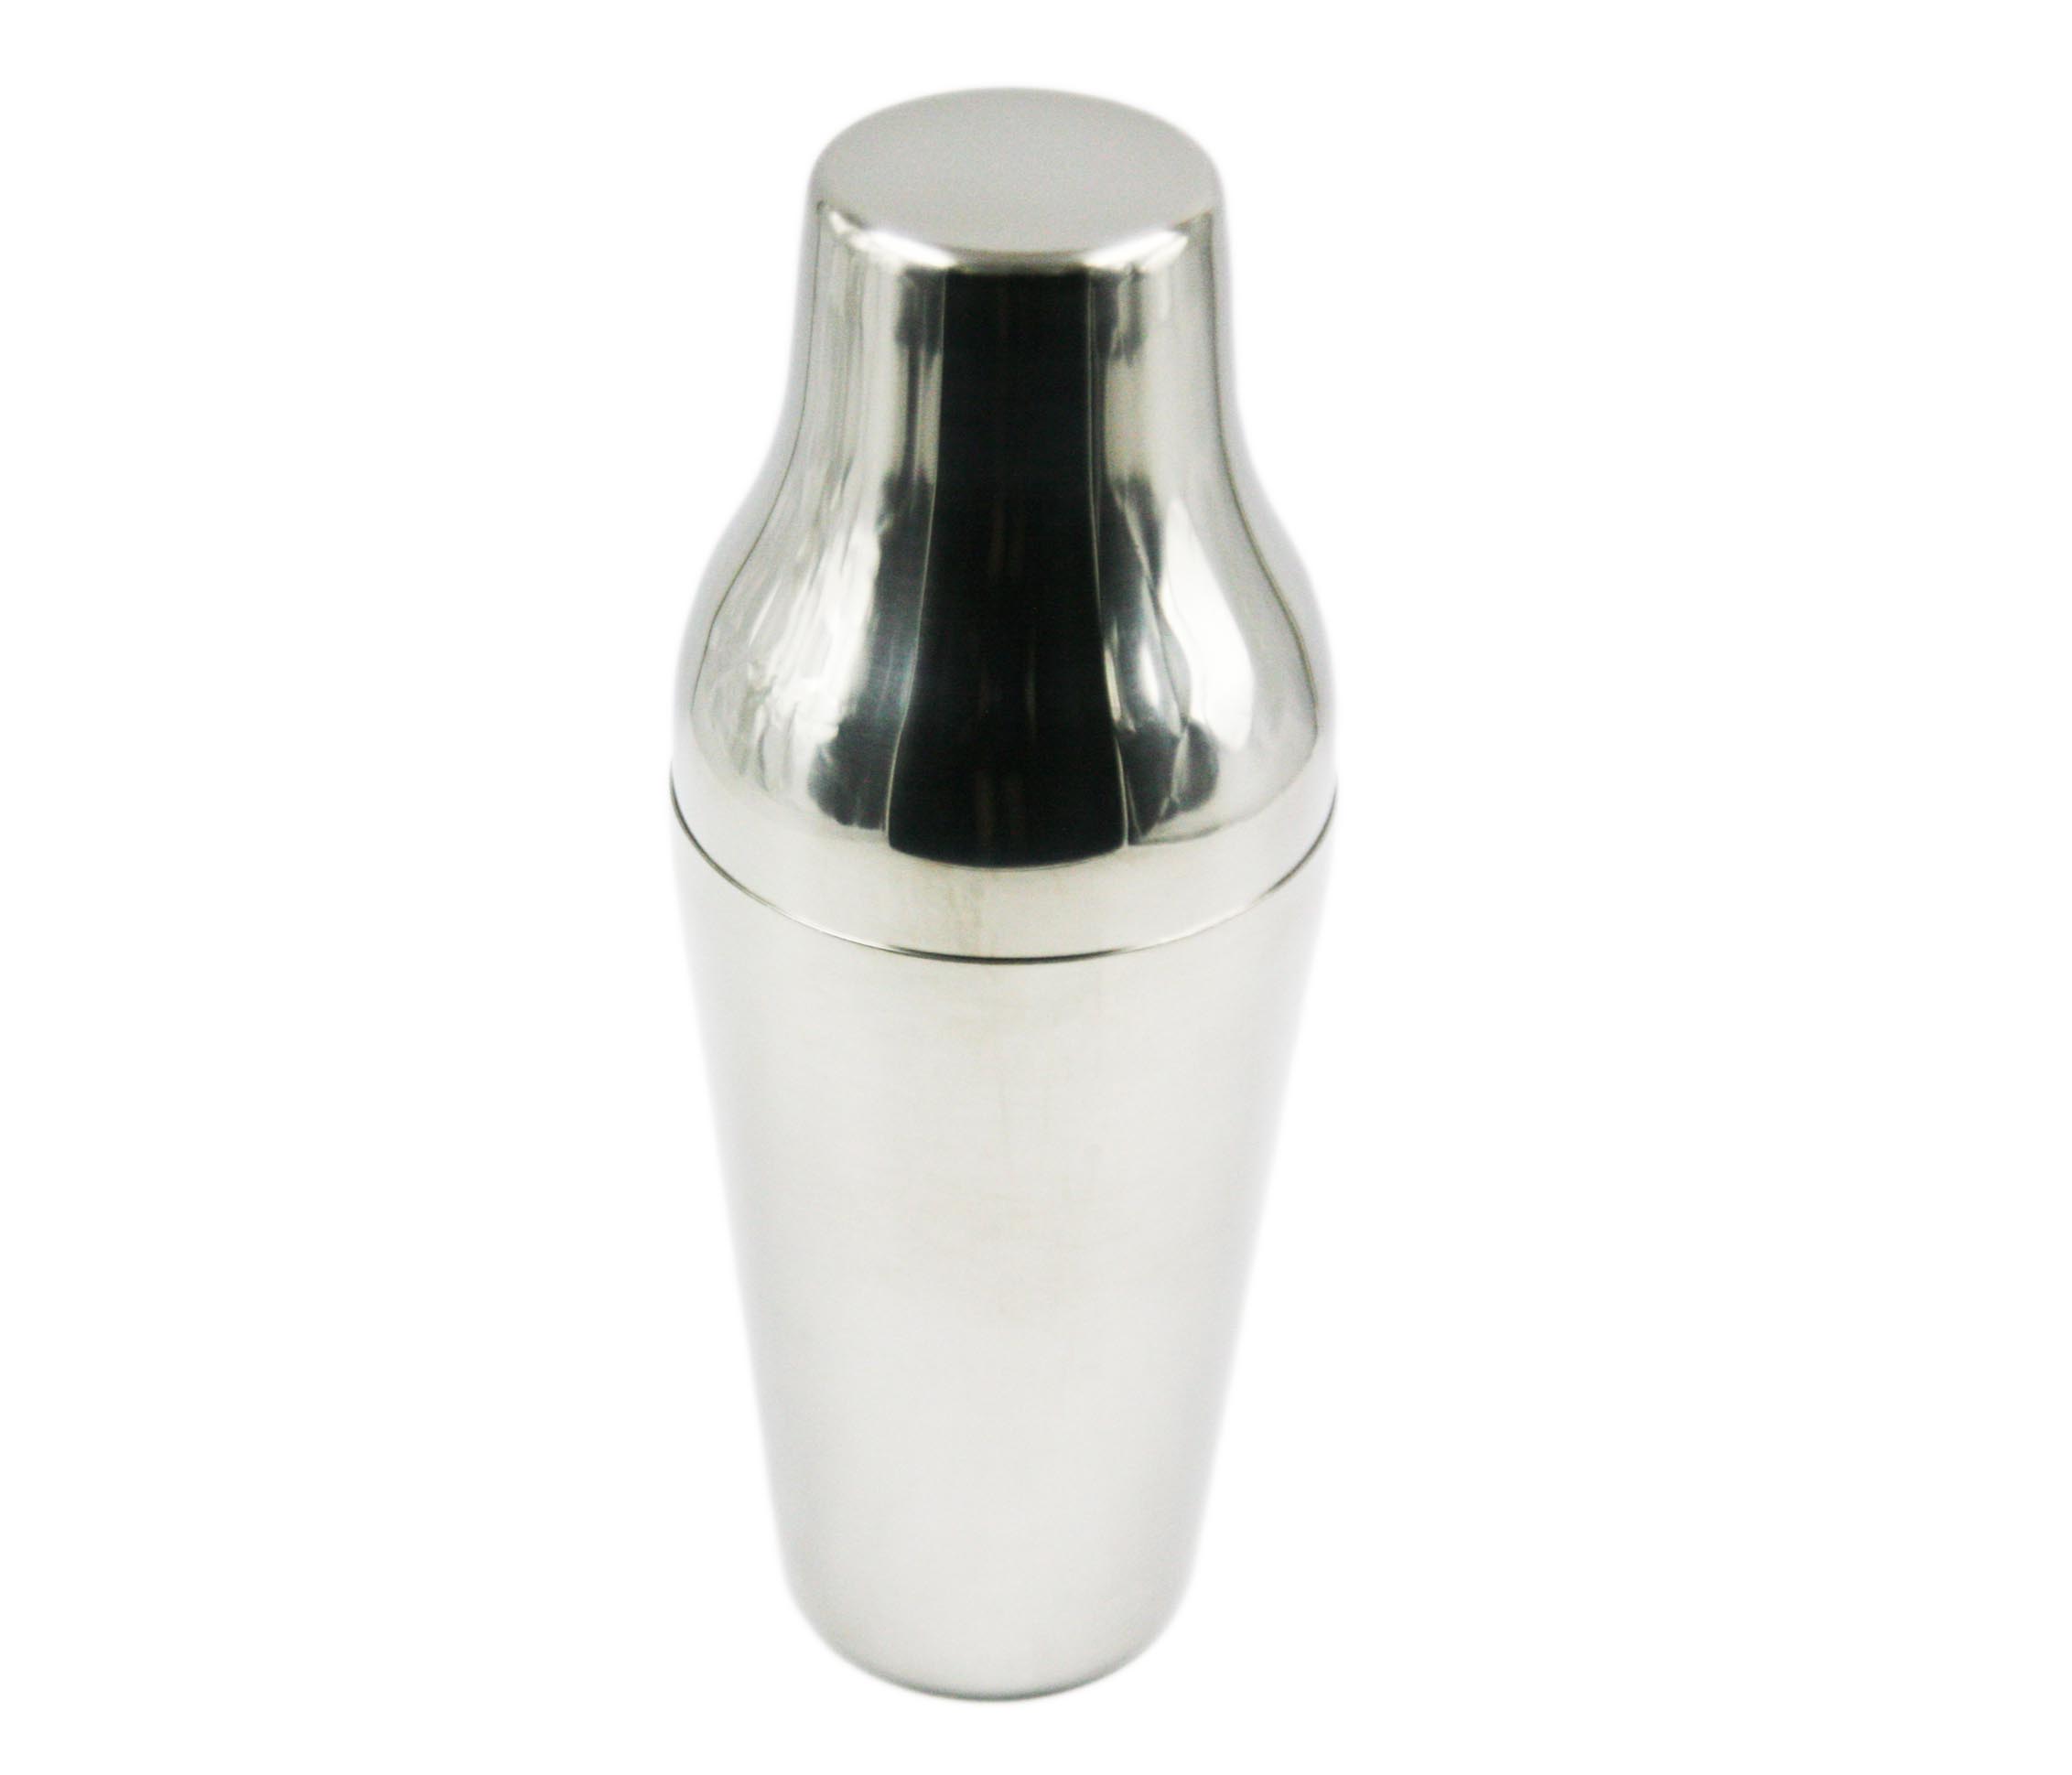 Semplice 0.75L stile in acciaio inox Cocktail Shaker francese Bicchieri EB-B57